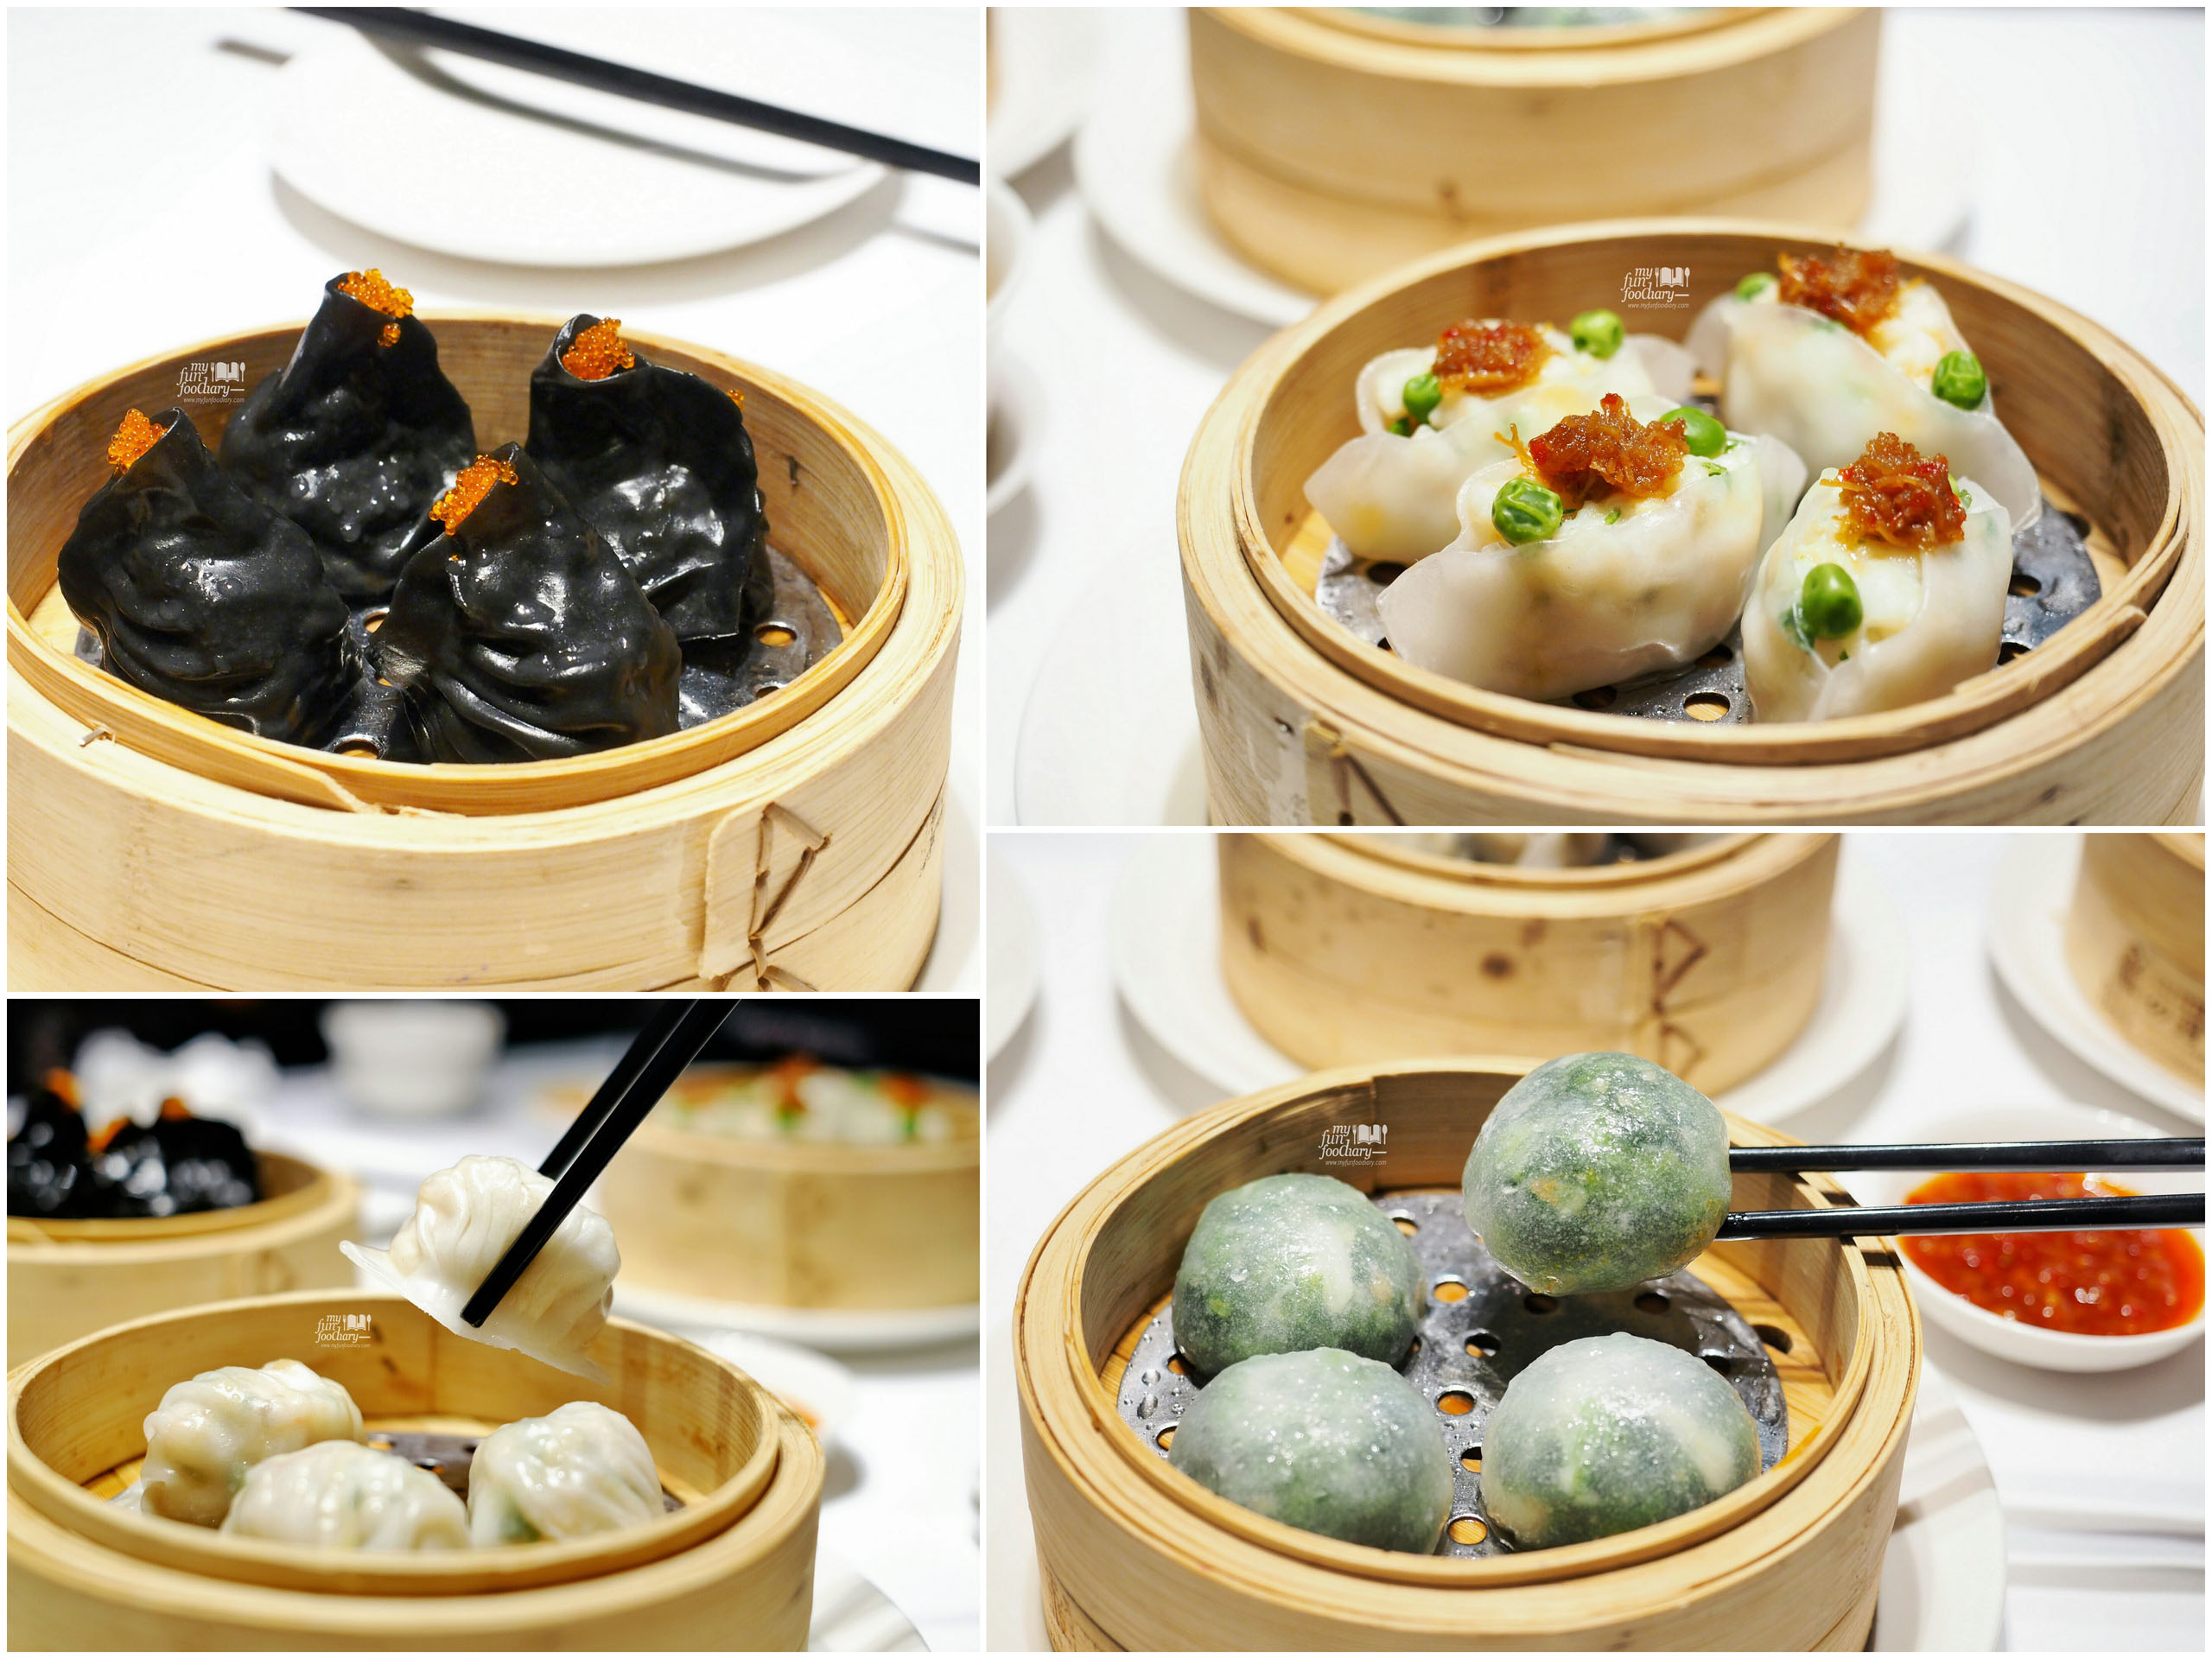 Dimsum Selection at Xin Hwa Mandarin Oriental by Myfunfoodiary